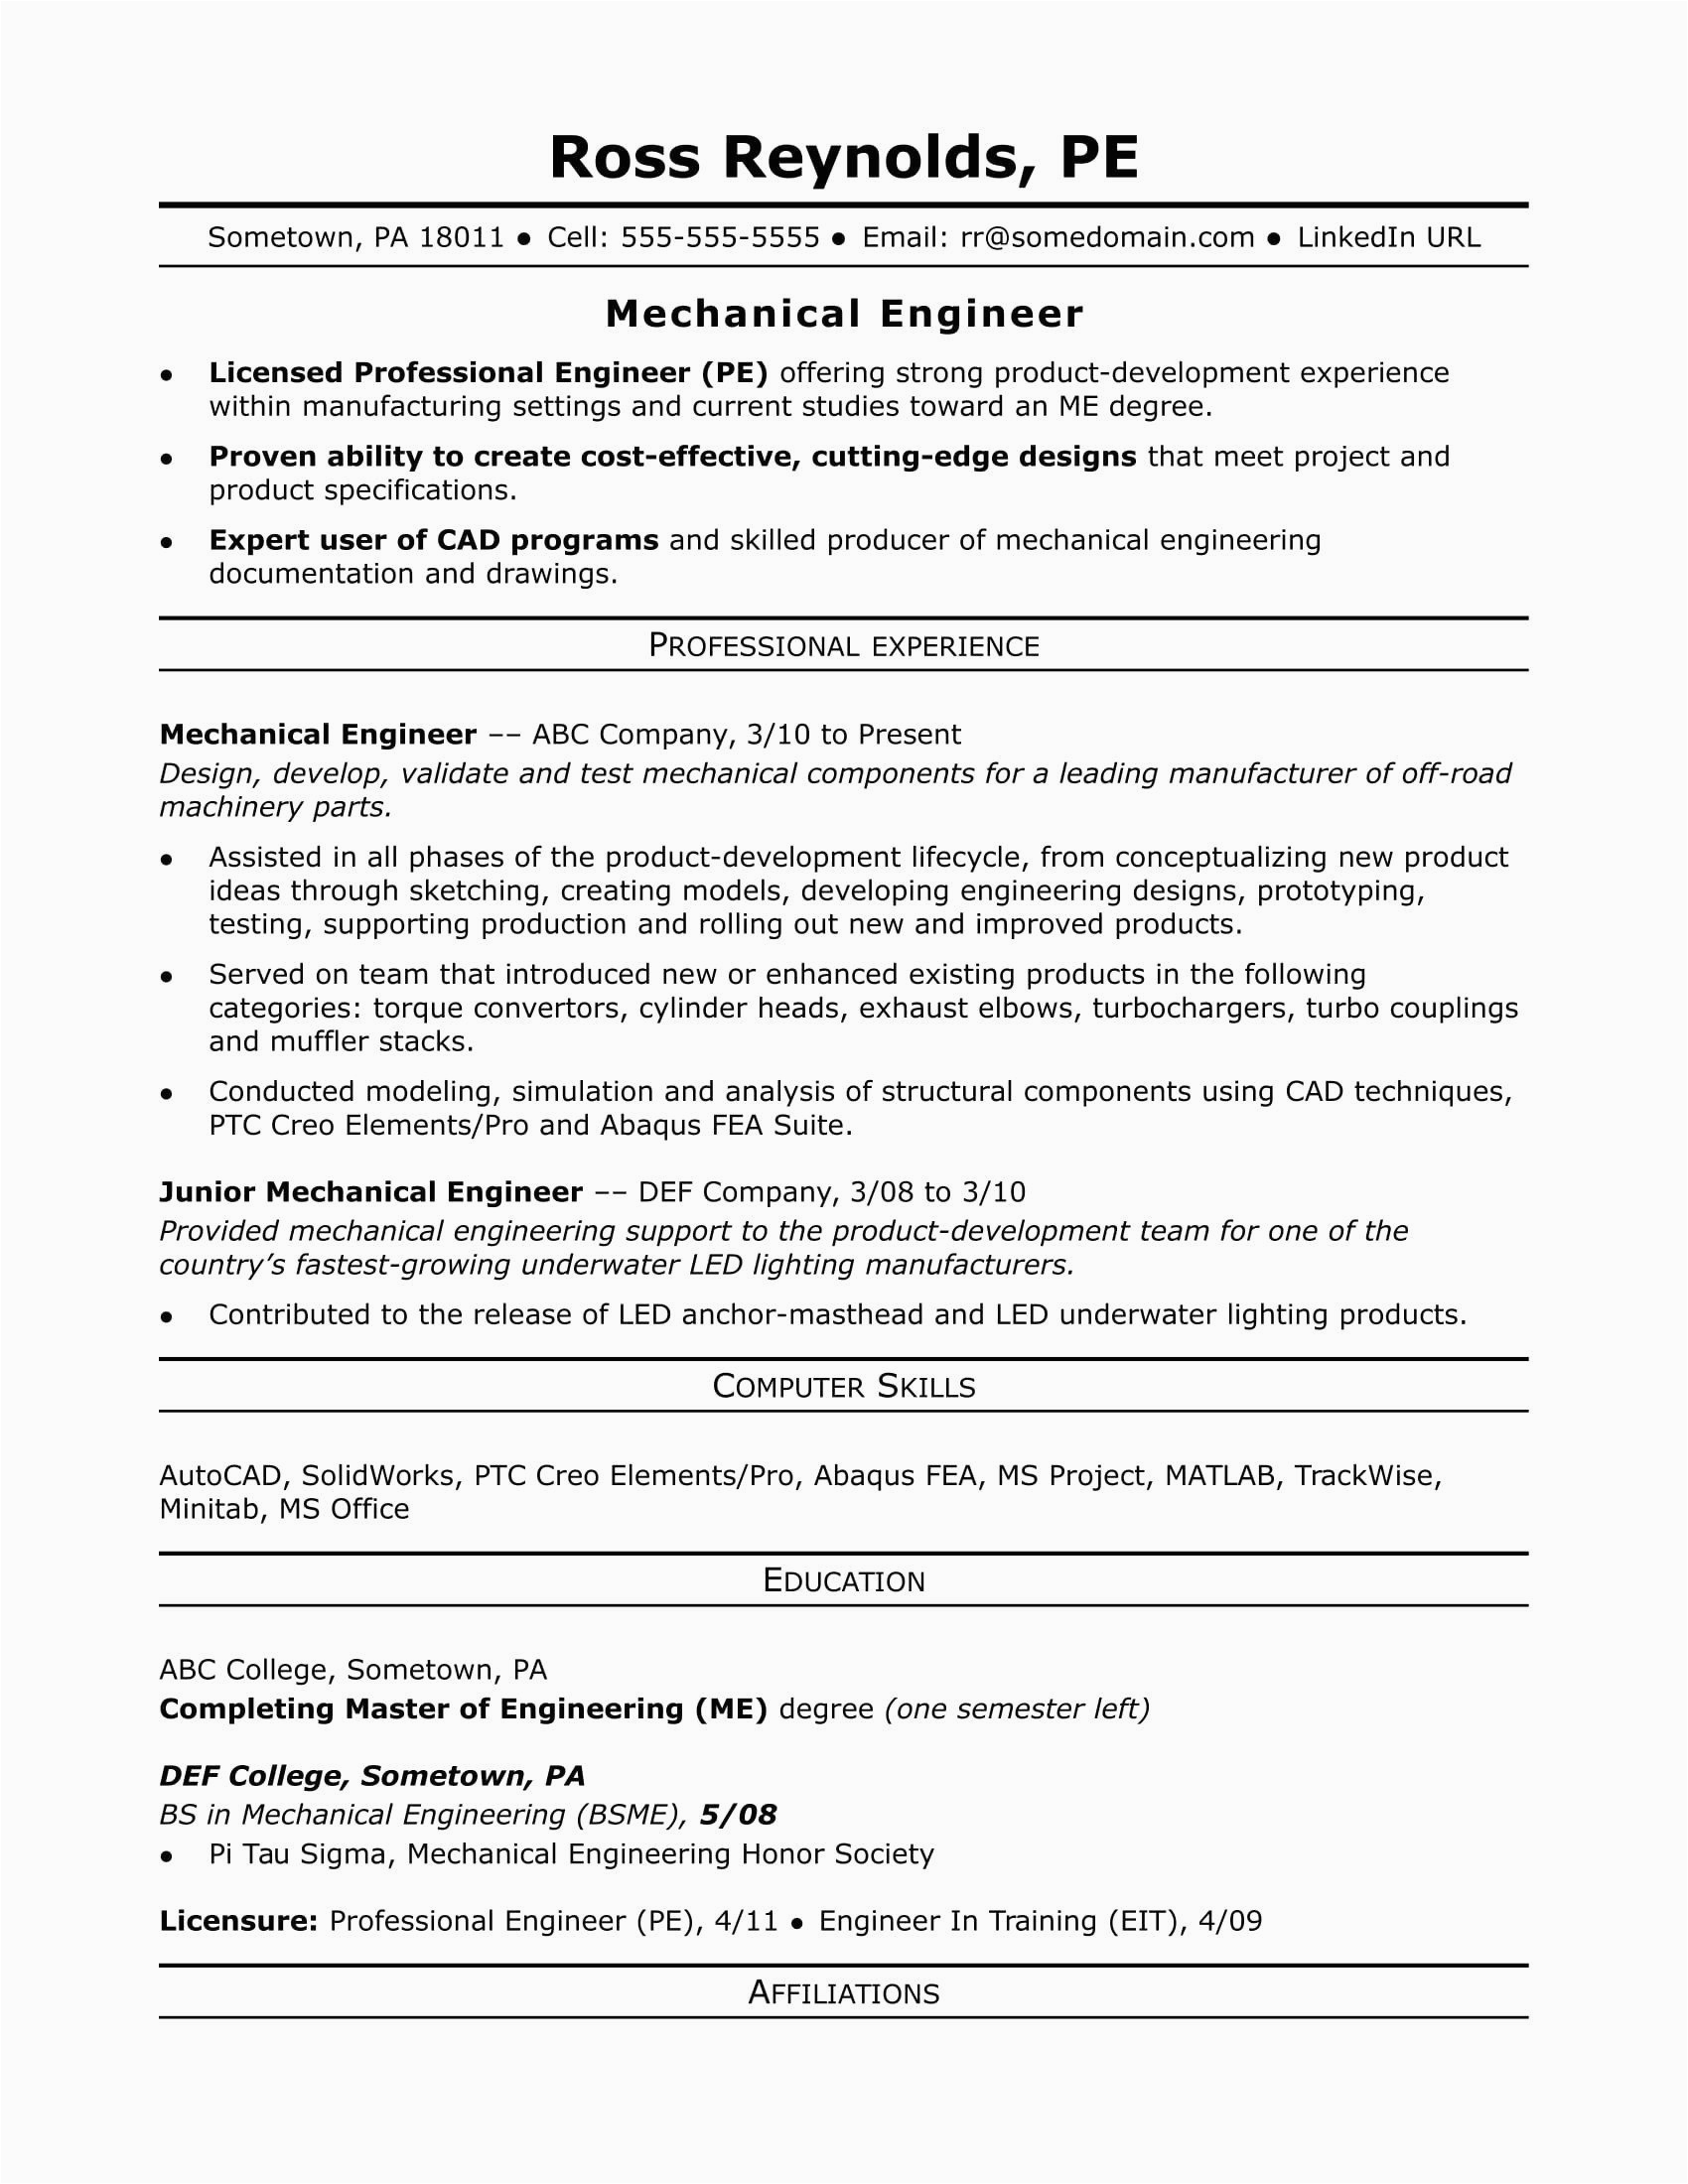 Sample Resume Headline for Mechanical Engineer Best Resume Headline for Mechanical Engineer Best Resume